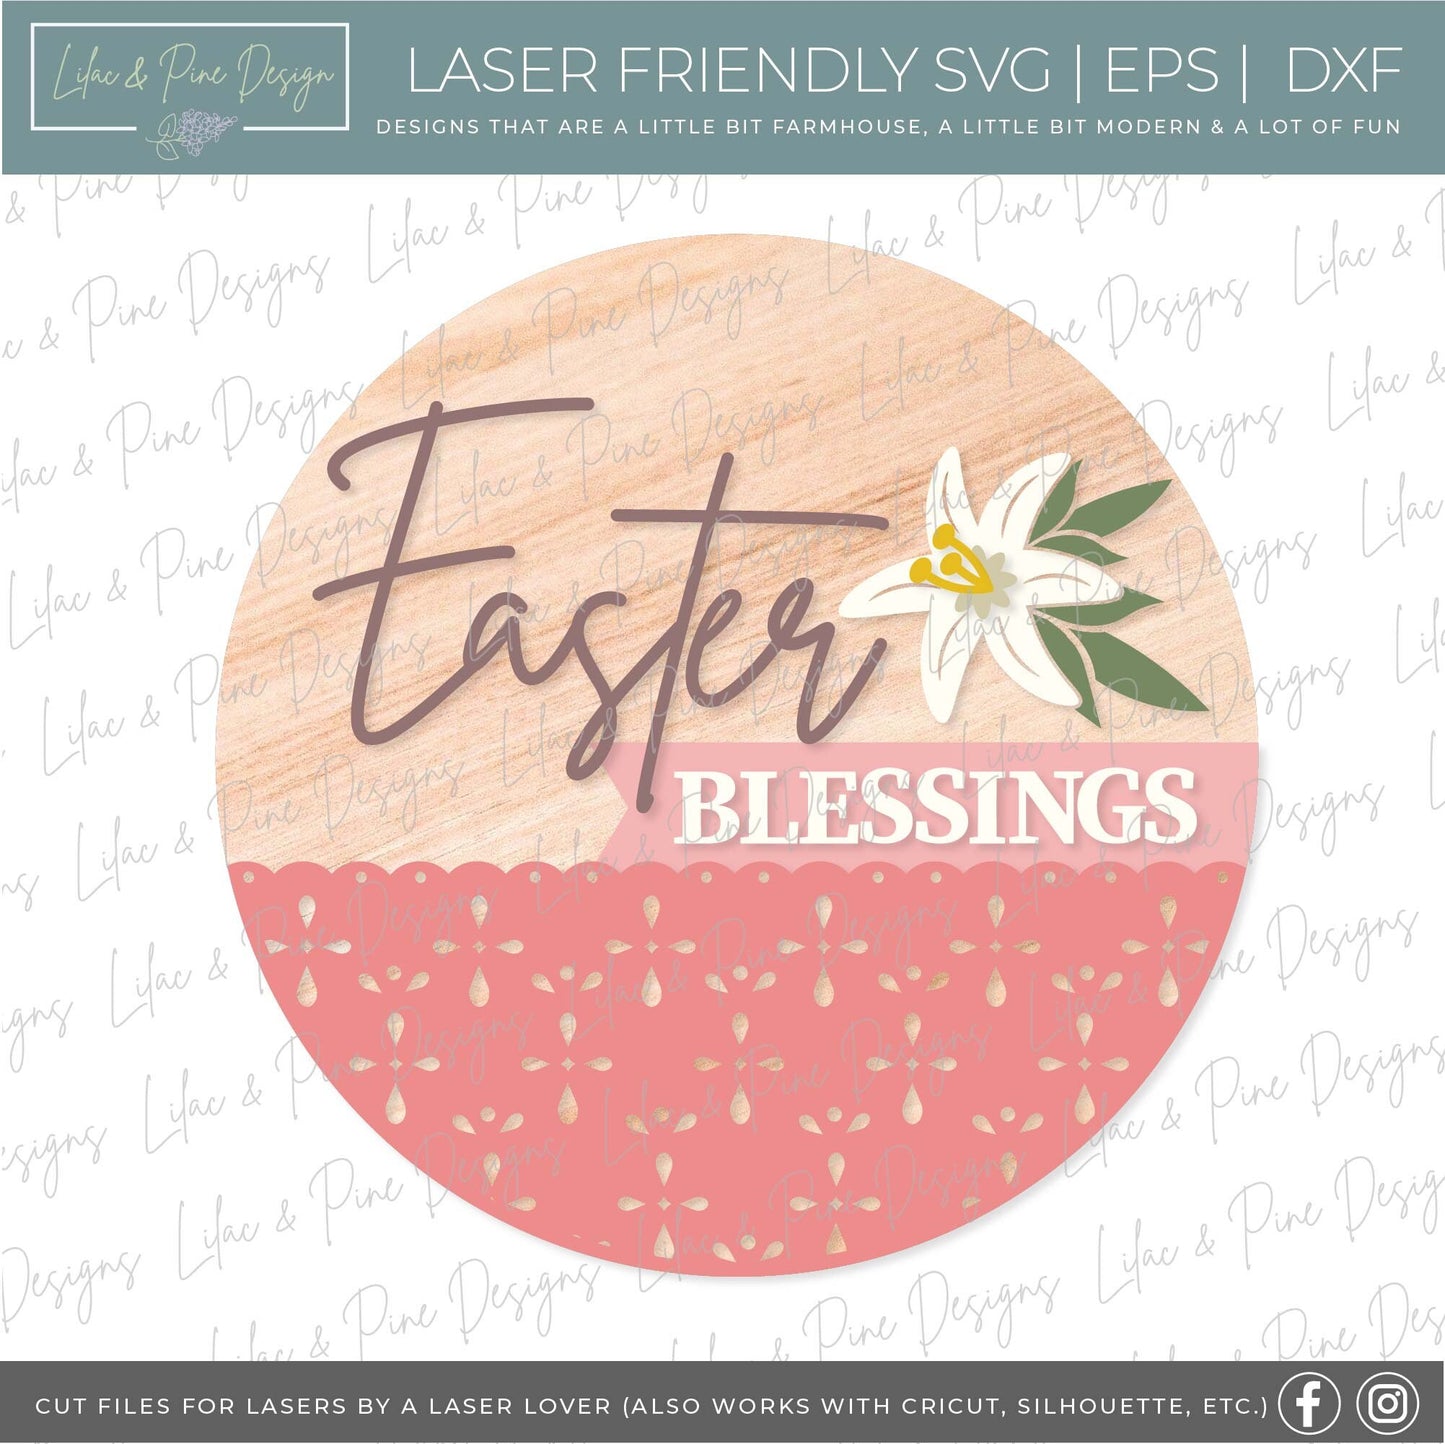 Easter Blessings sign SVG, Easter lily door hanger, Easter Welcome sign SVG, Easter decor, Easter wall decor, Glowforge SVG, laser cut file